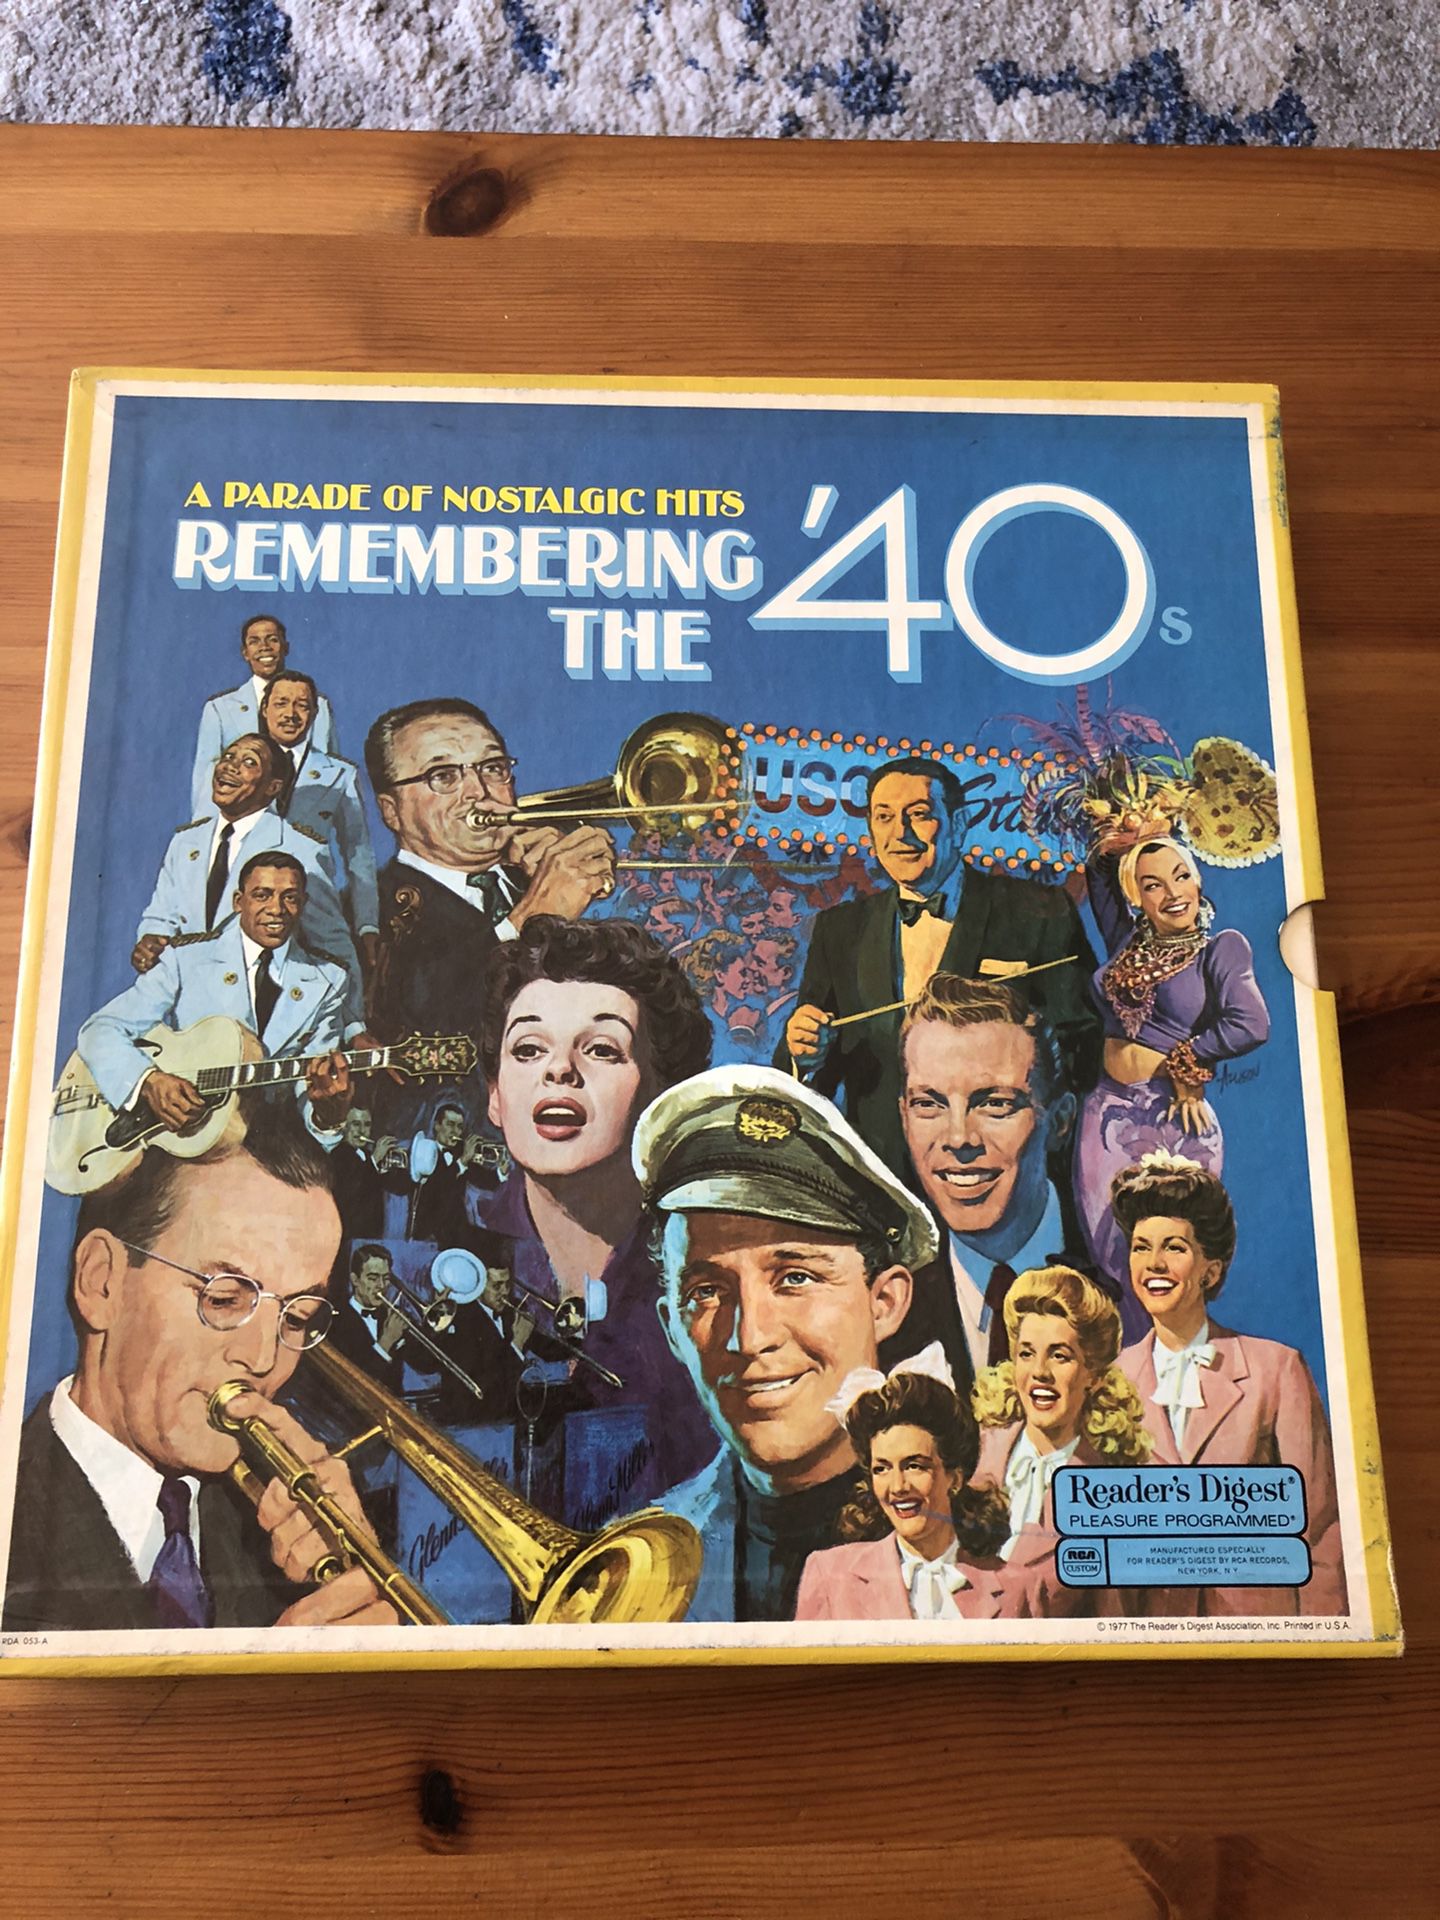 Remembering the 40s Vinyl Record